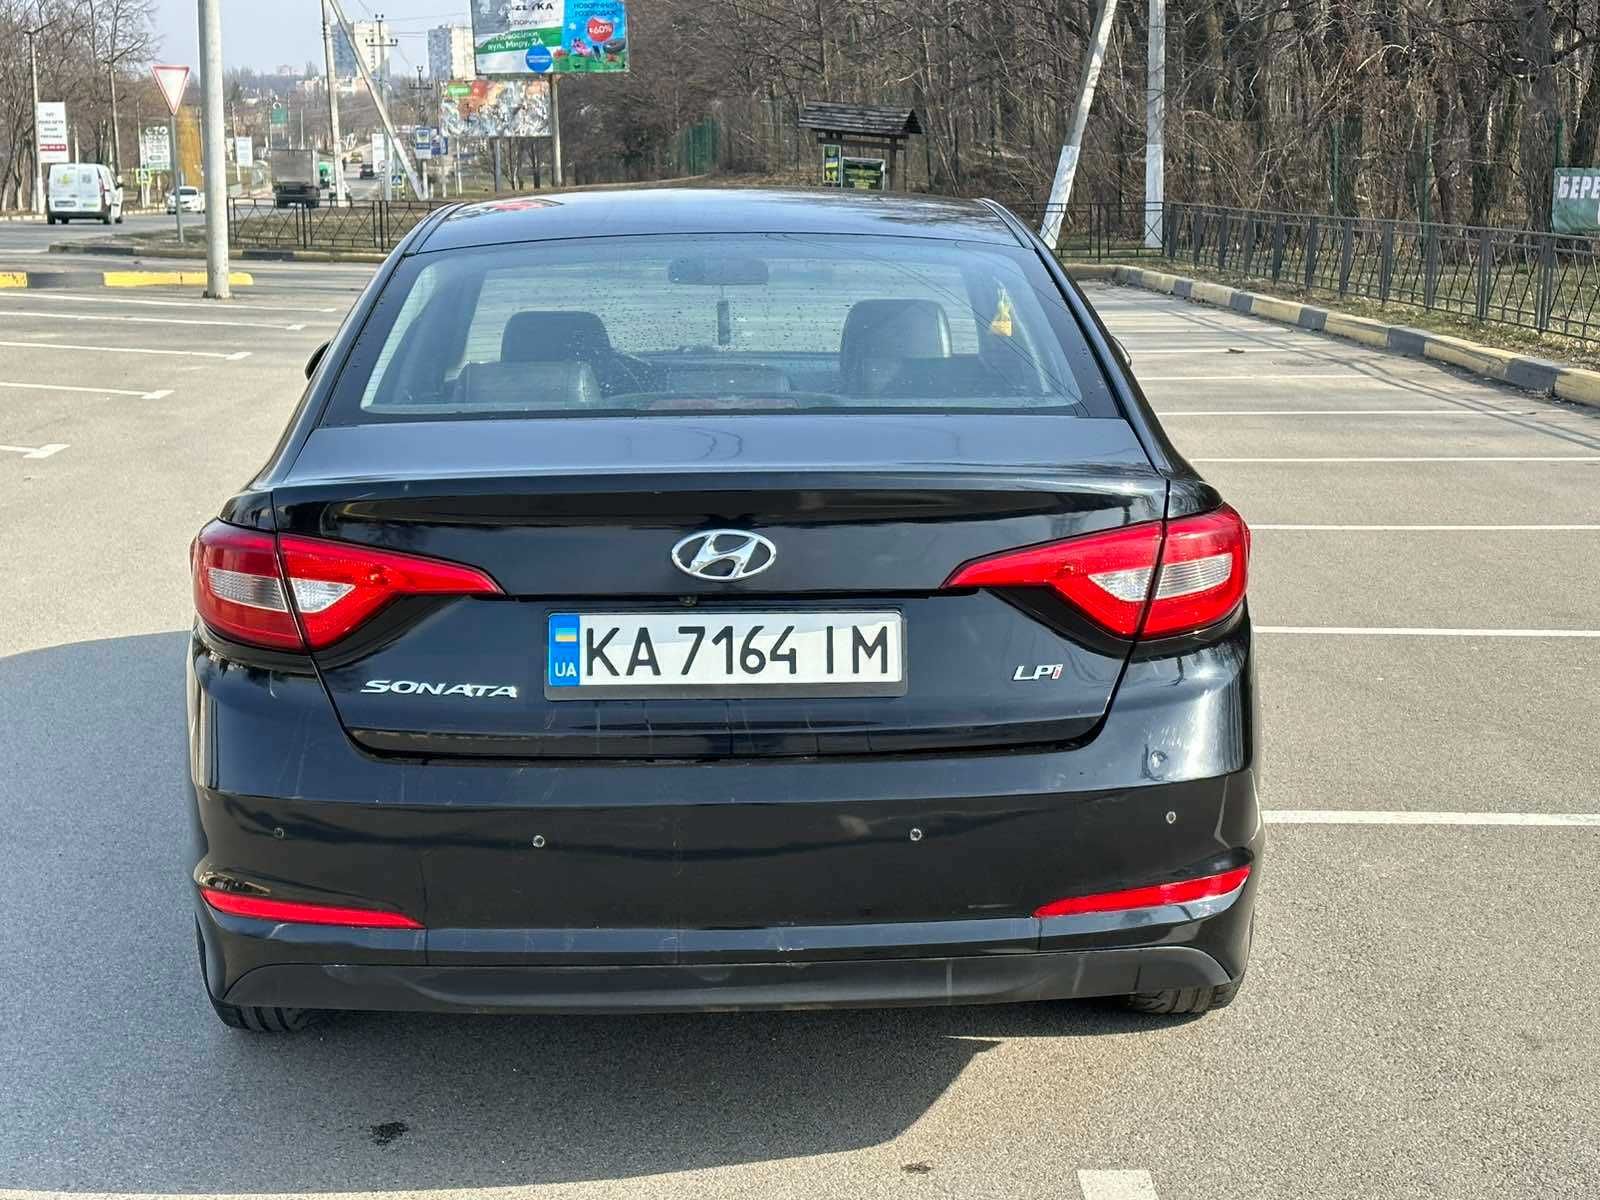 Аренда авто ДОЛГОСРОЧНО Hyundai Sonata 16г 3999грн под ВЫКУП